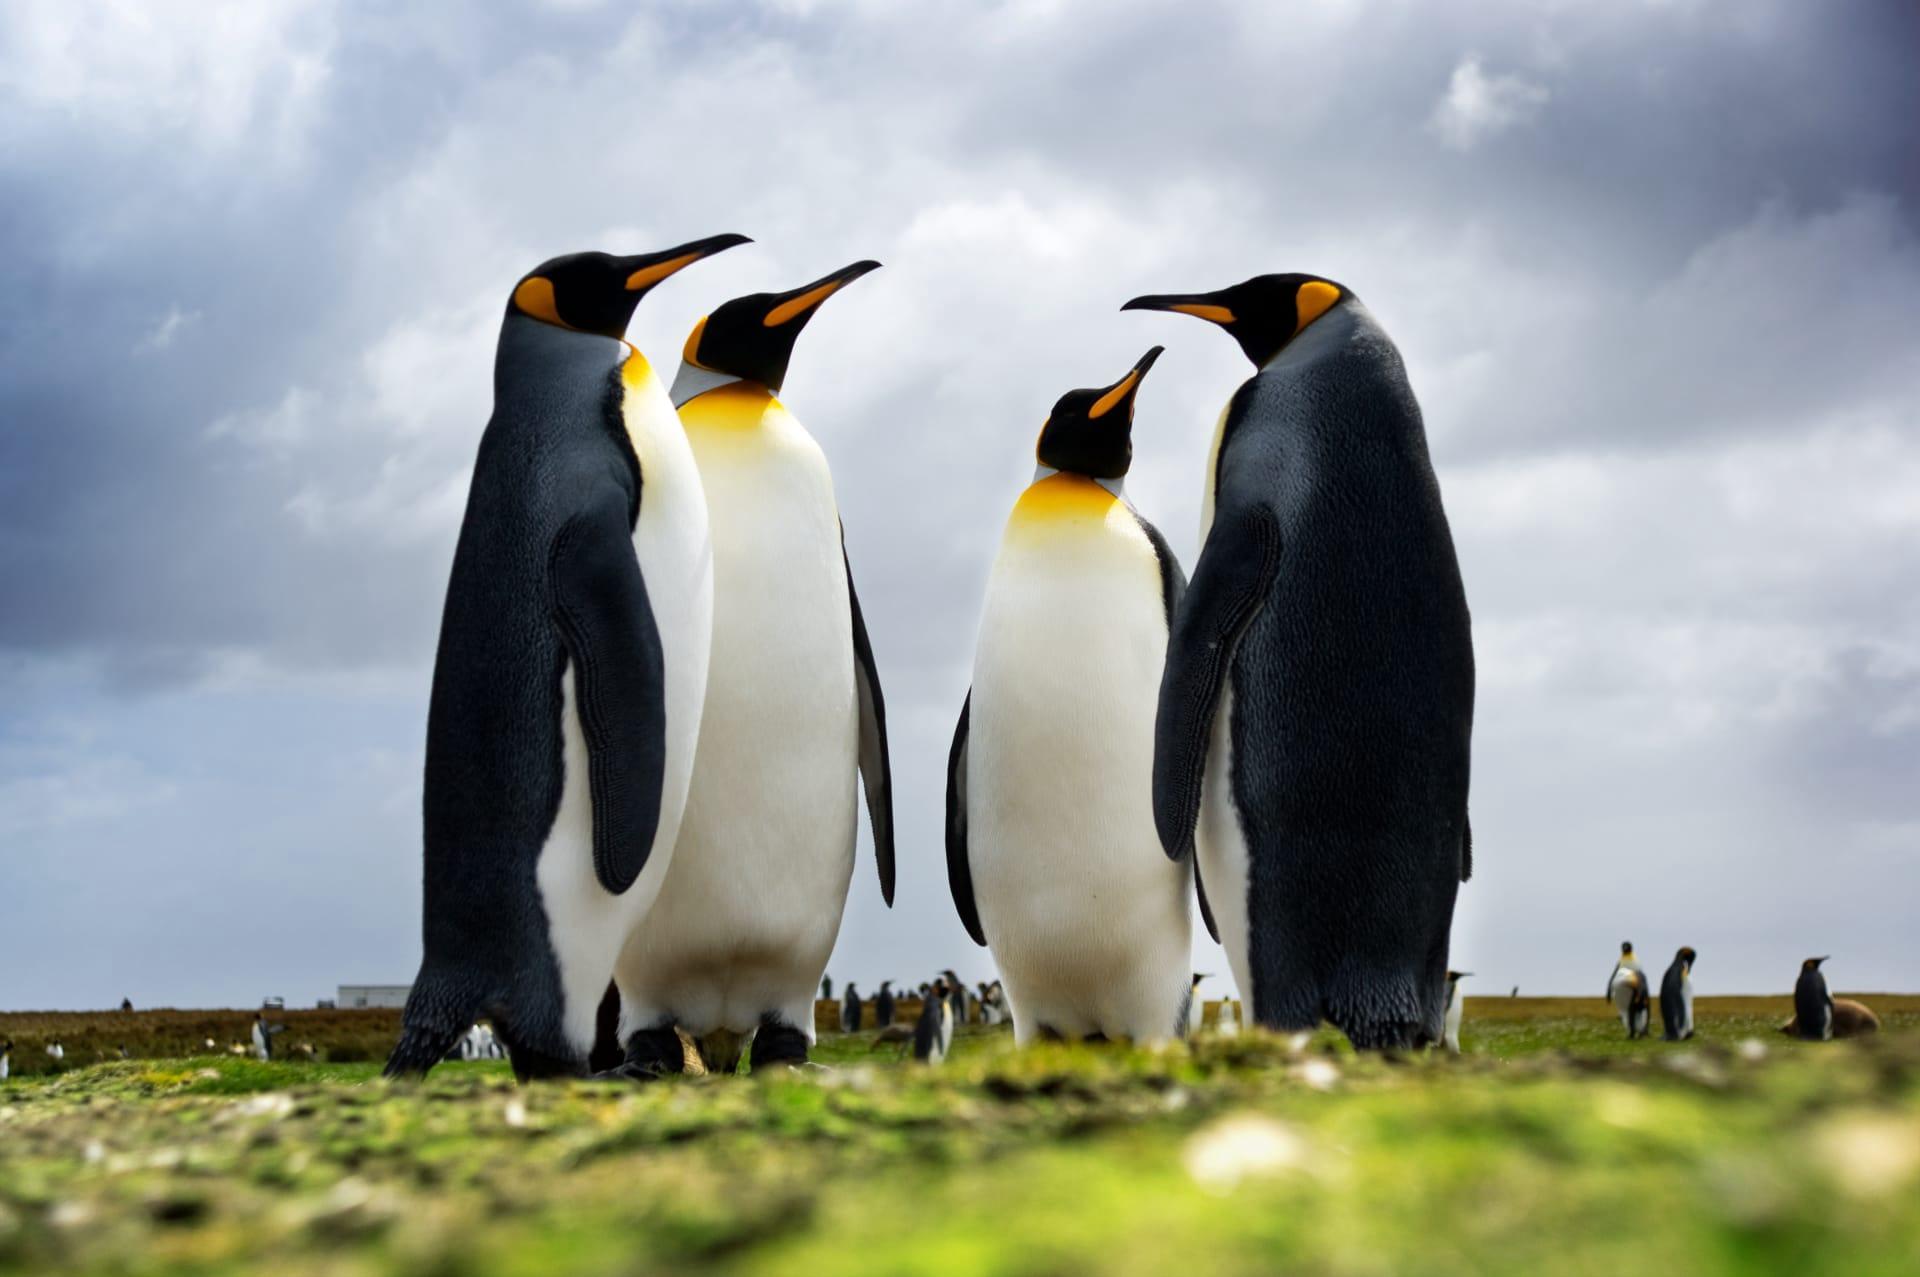 Emperor penguin pictures